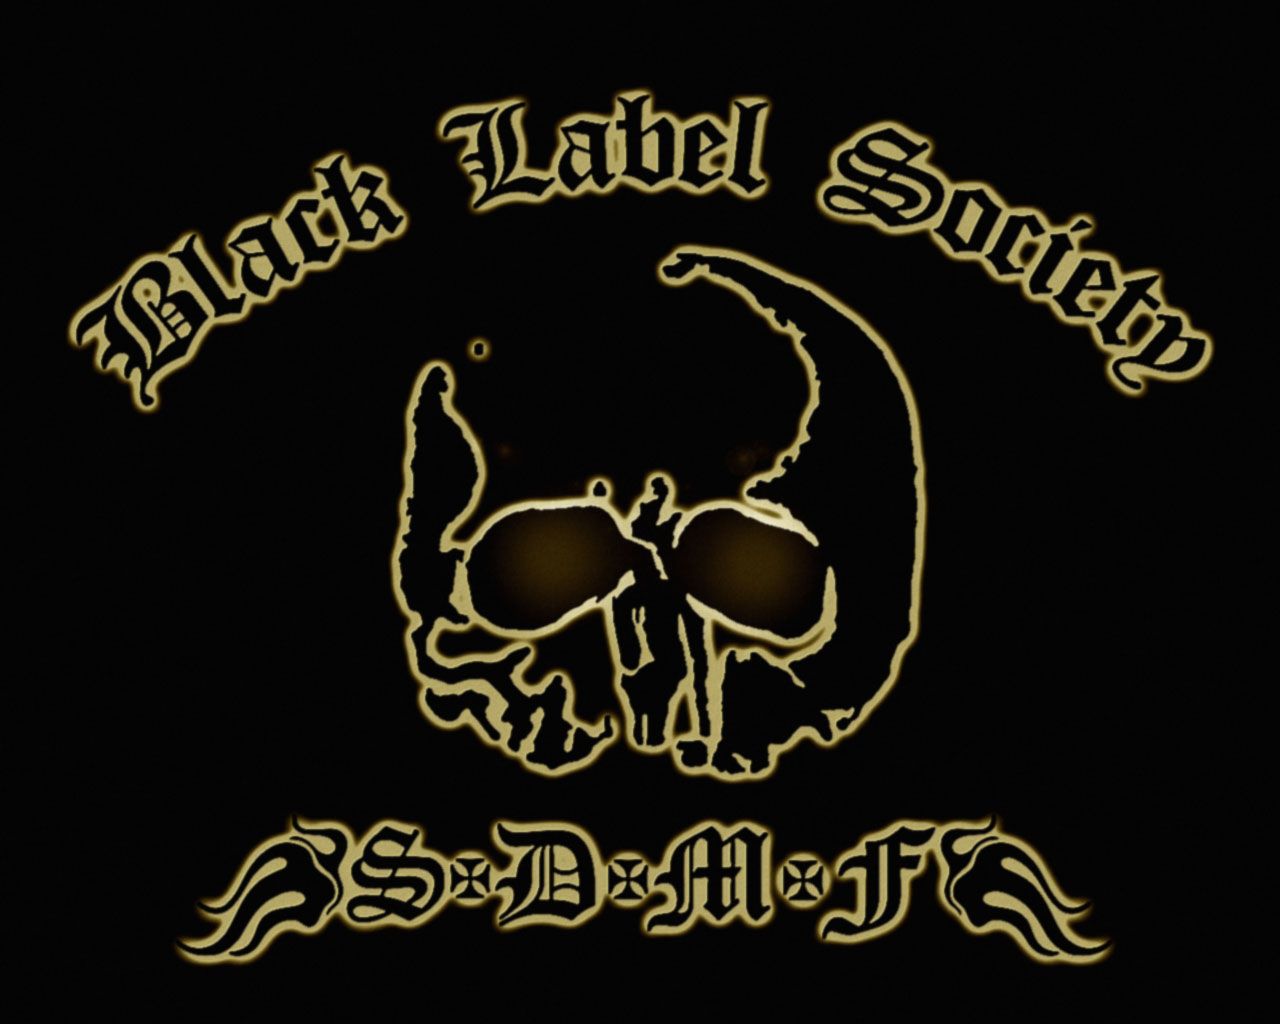 Black Label Society Wallpaper B1 Rock Band